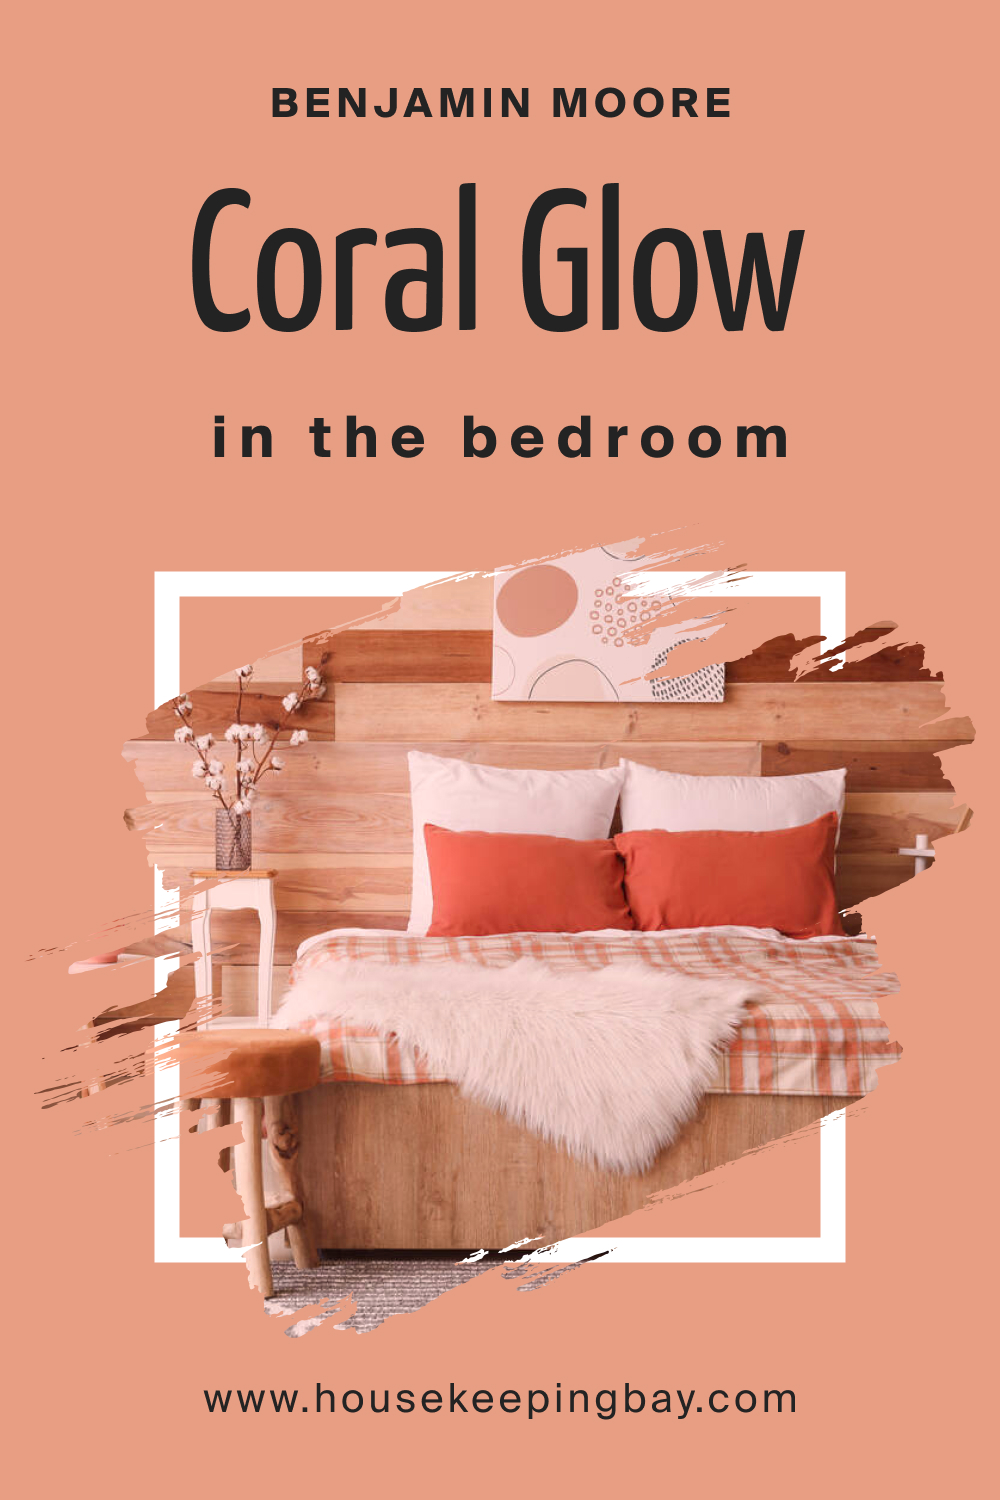 Benjamin Moore. Coral Glow 026 for the Bedroom